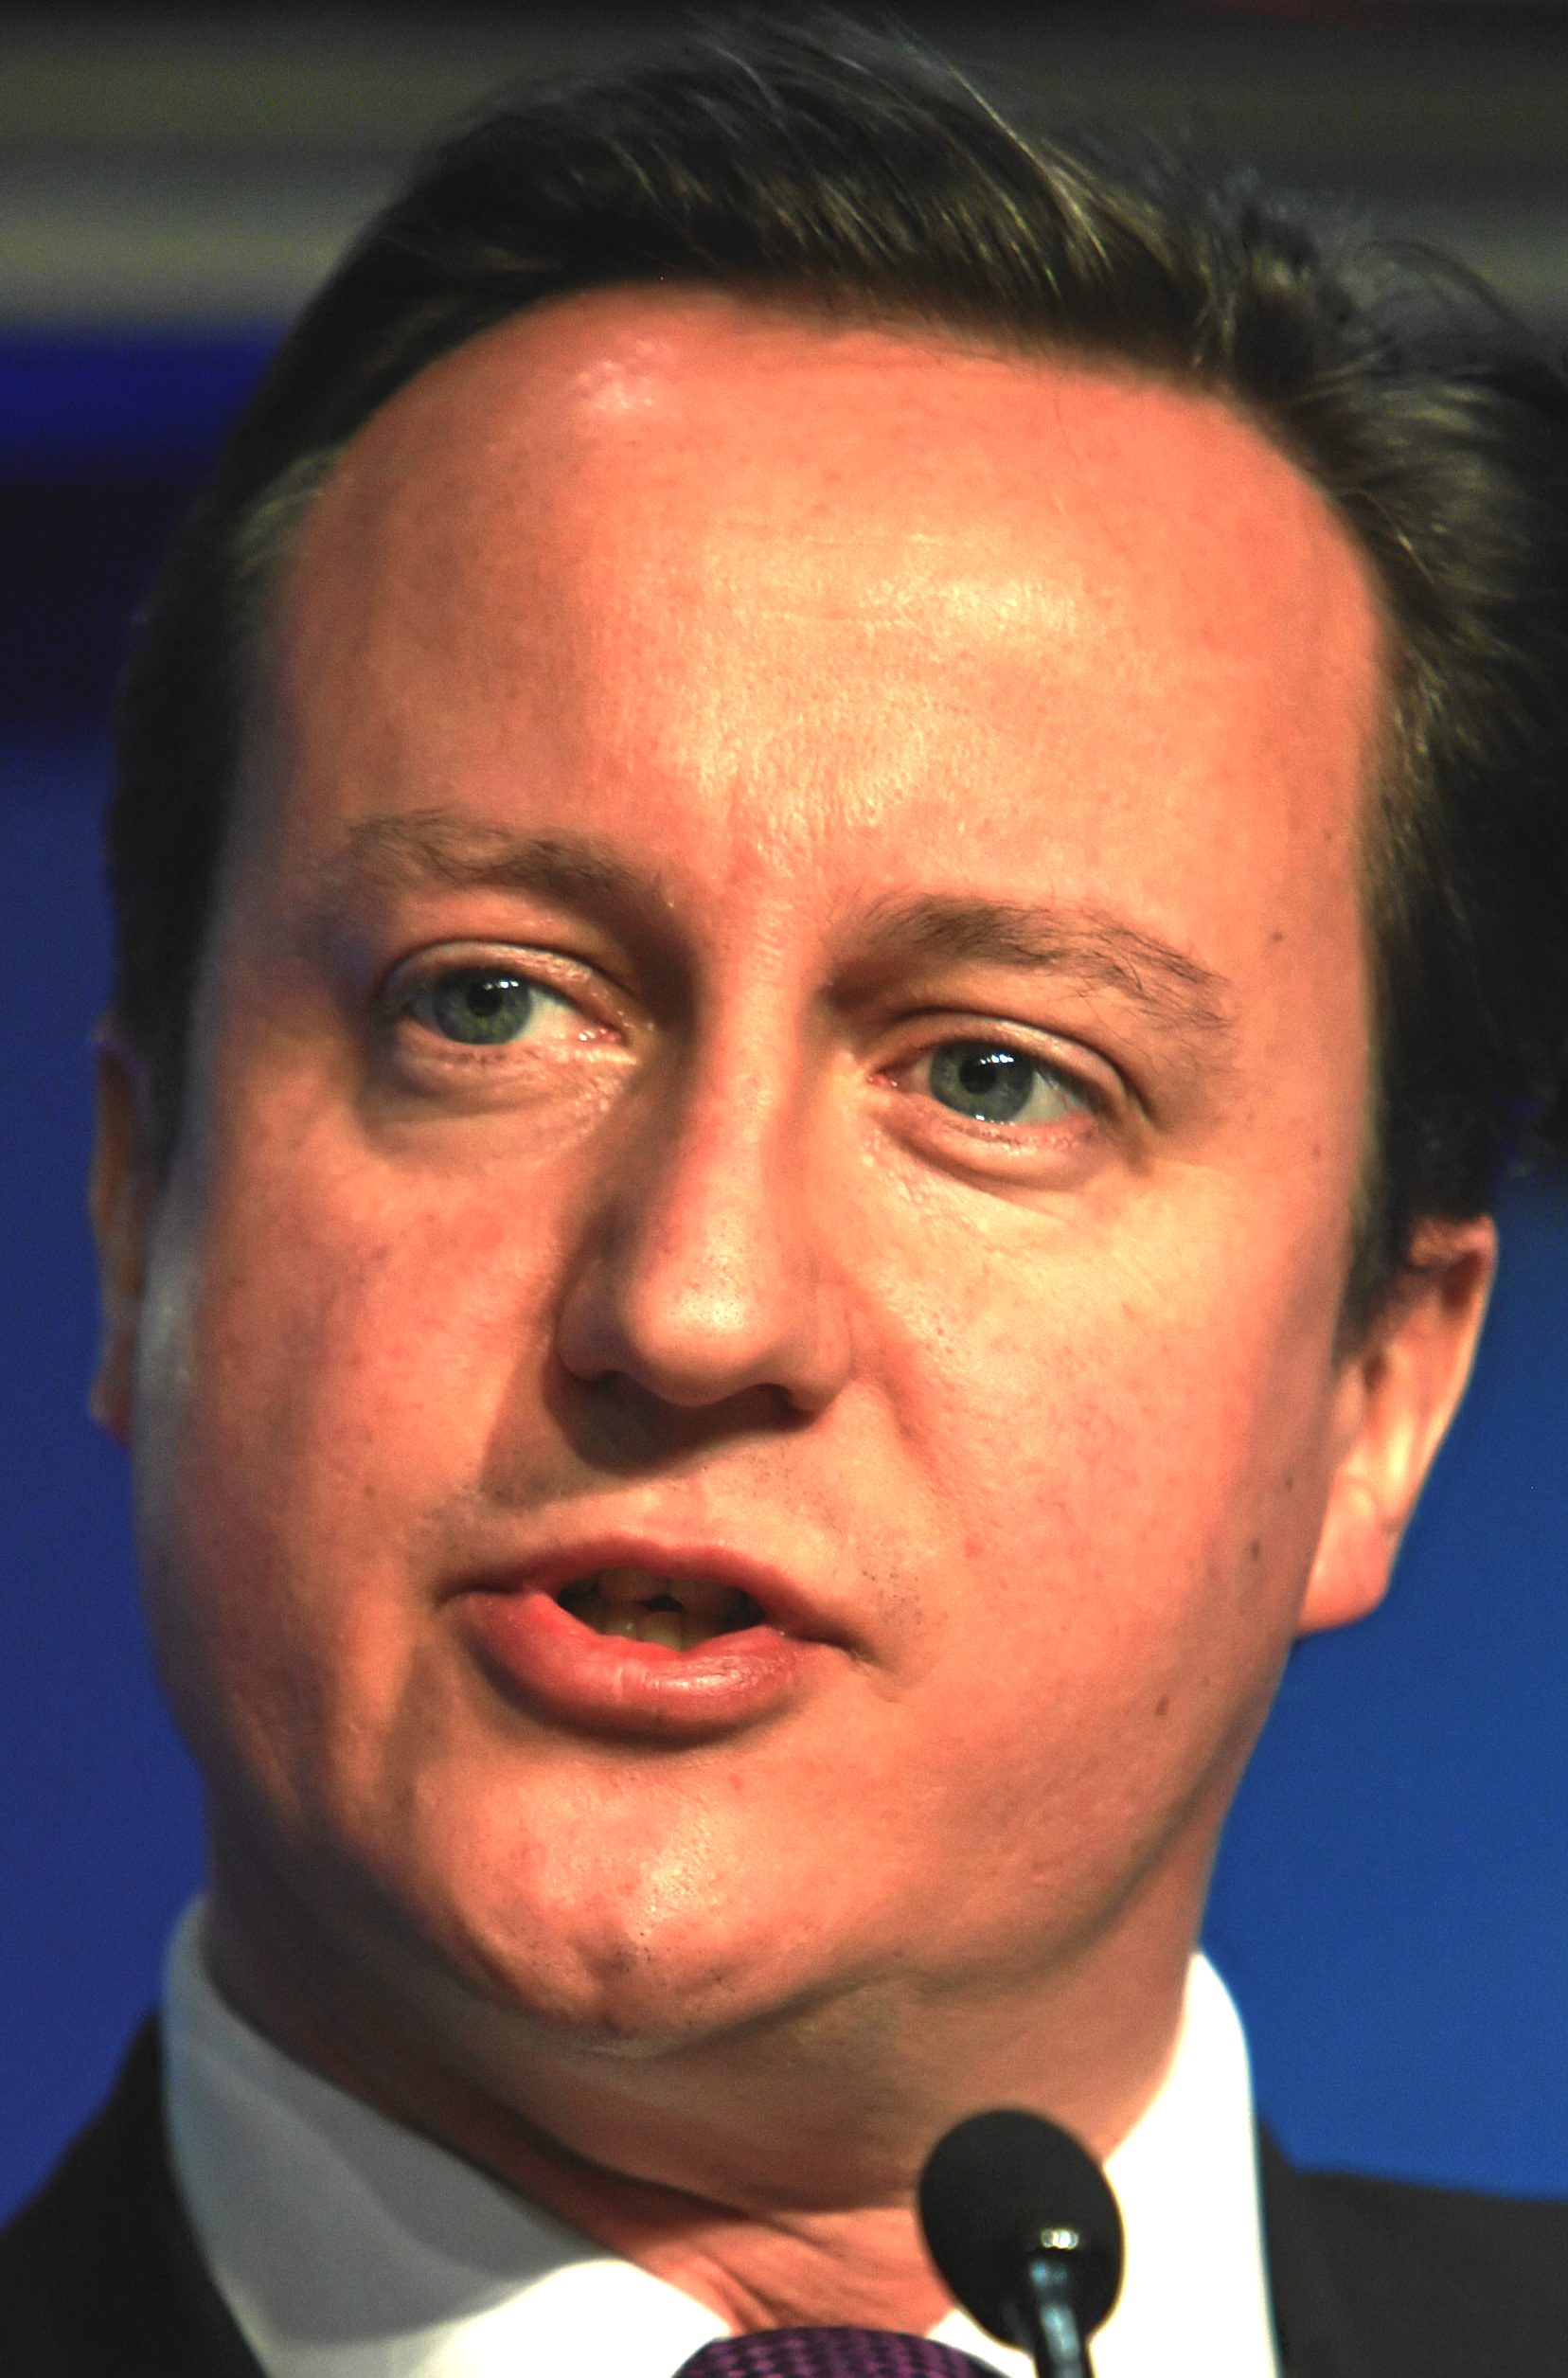 David Cameron prime minister of England, United Kingdom party politics and unsustanability